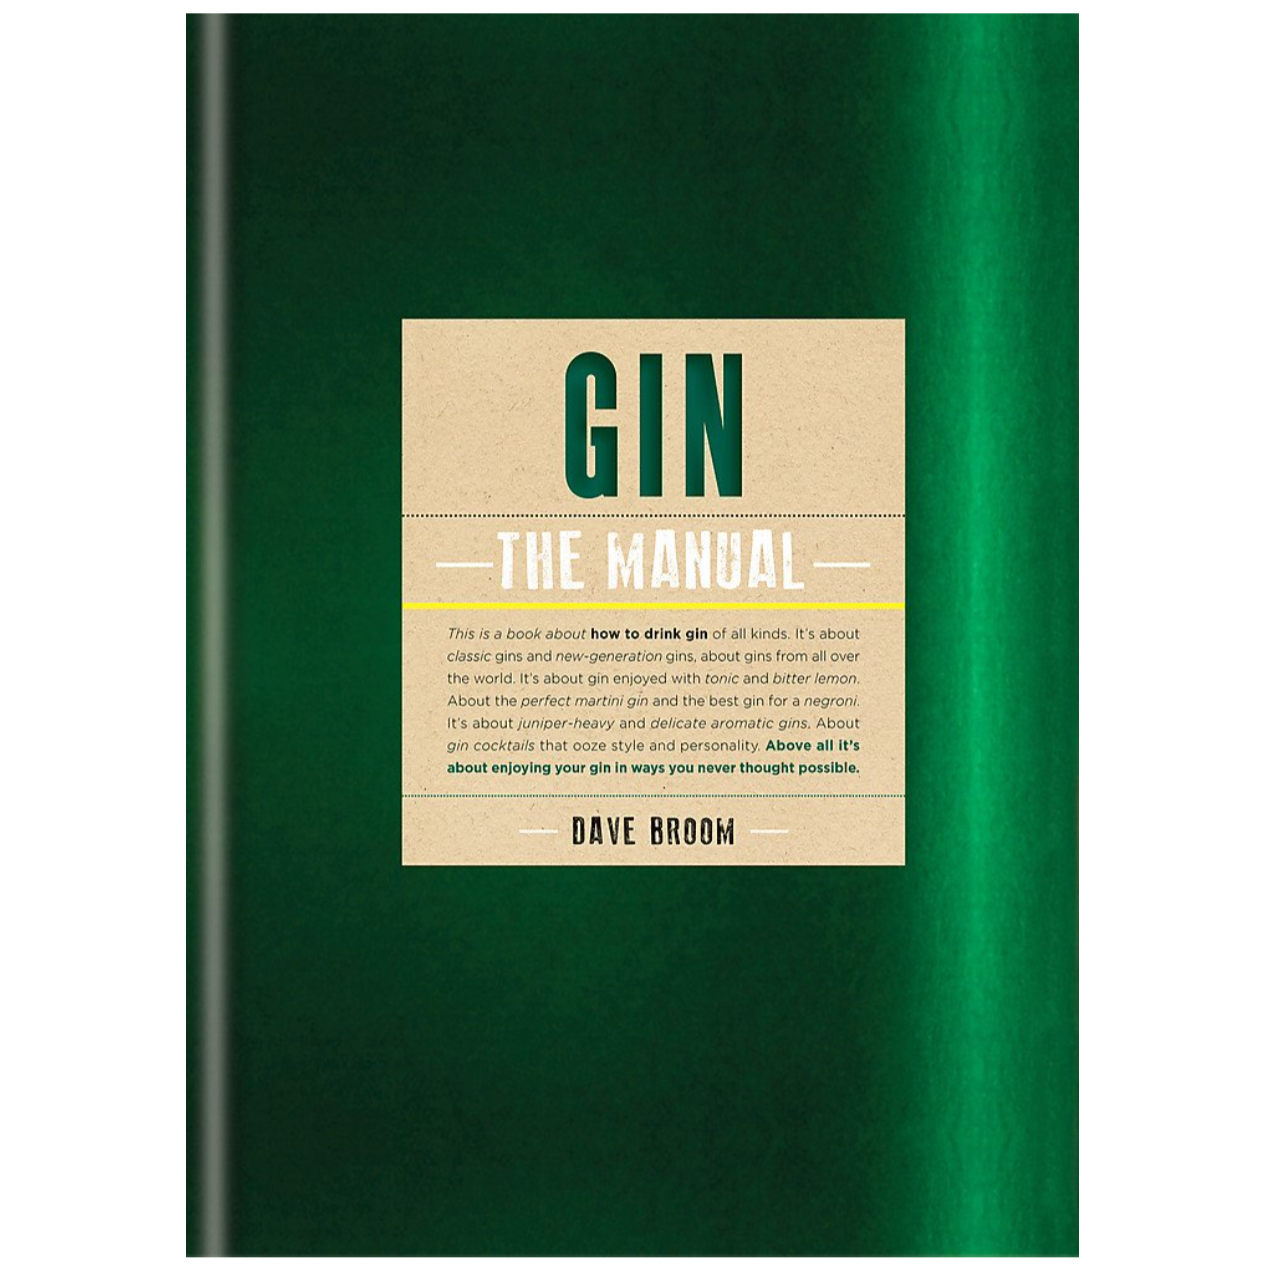 Drake General Store - Gin: The Manual